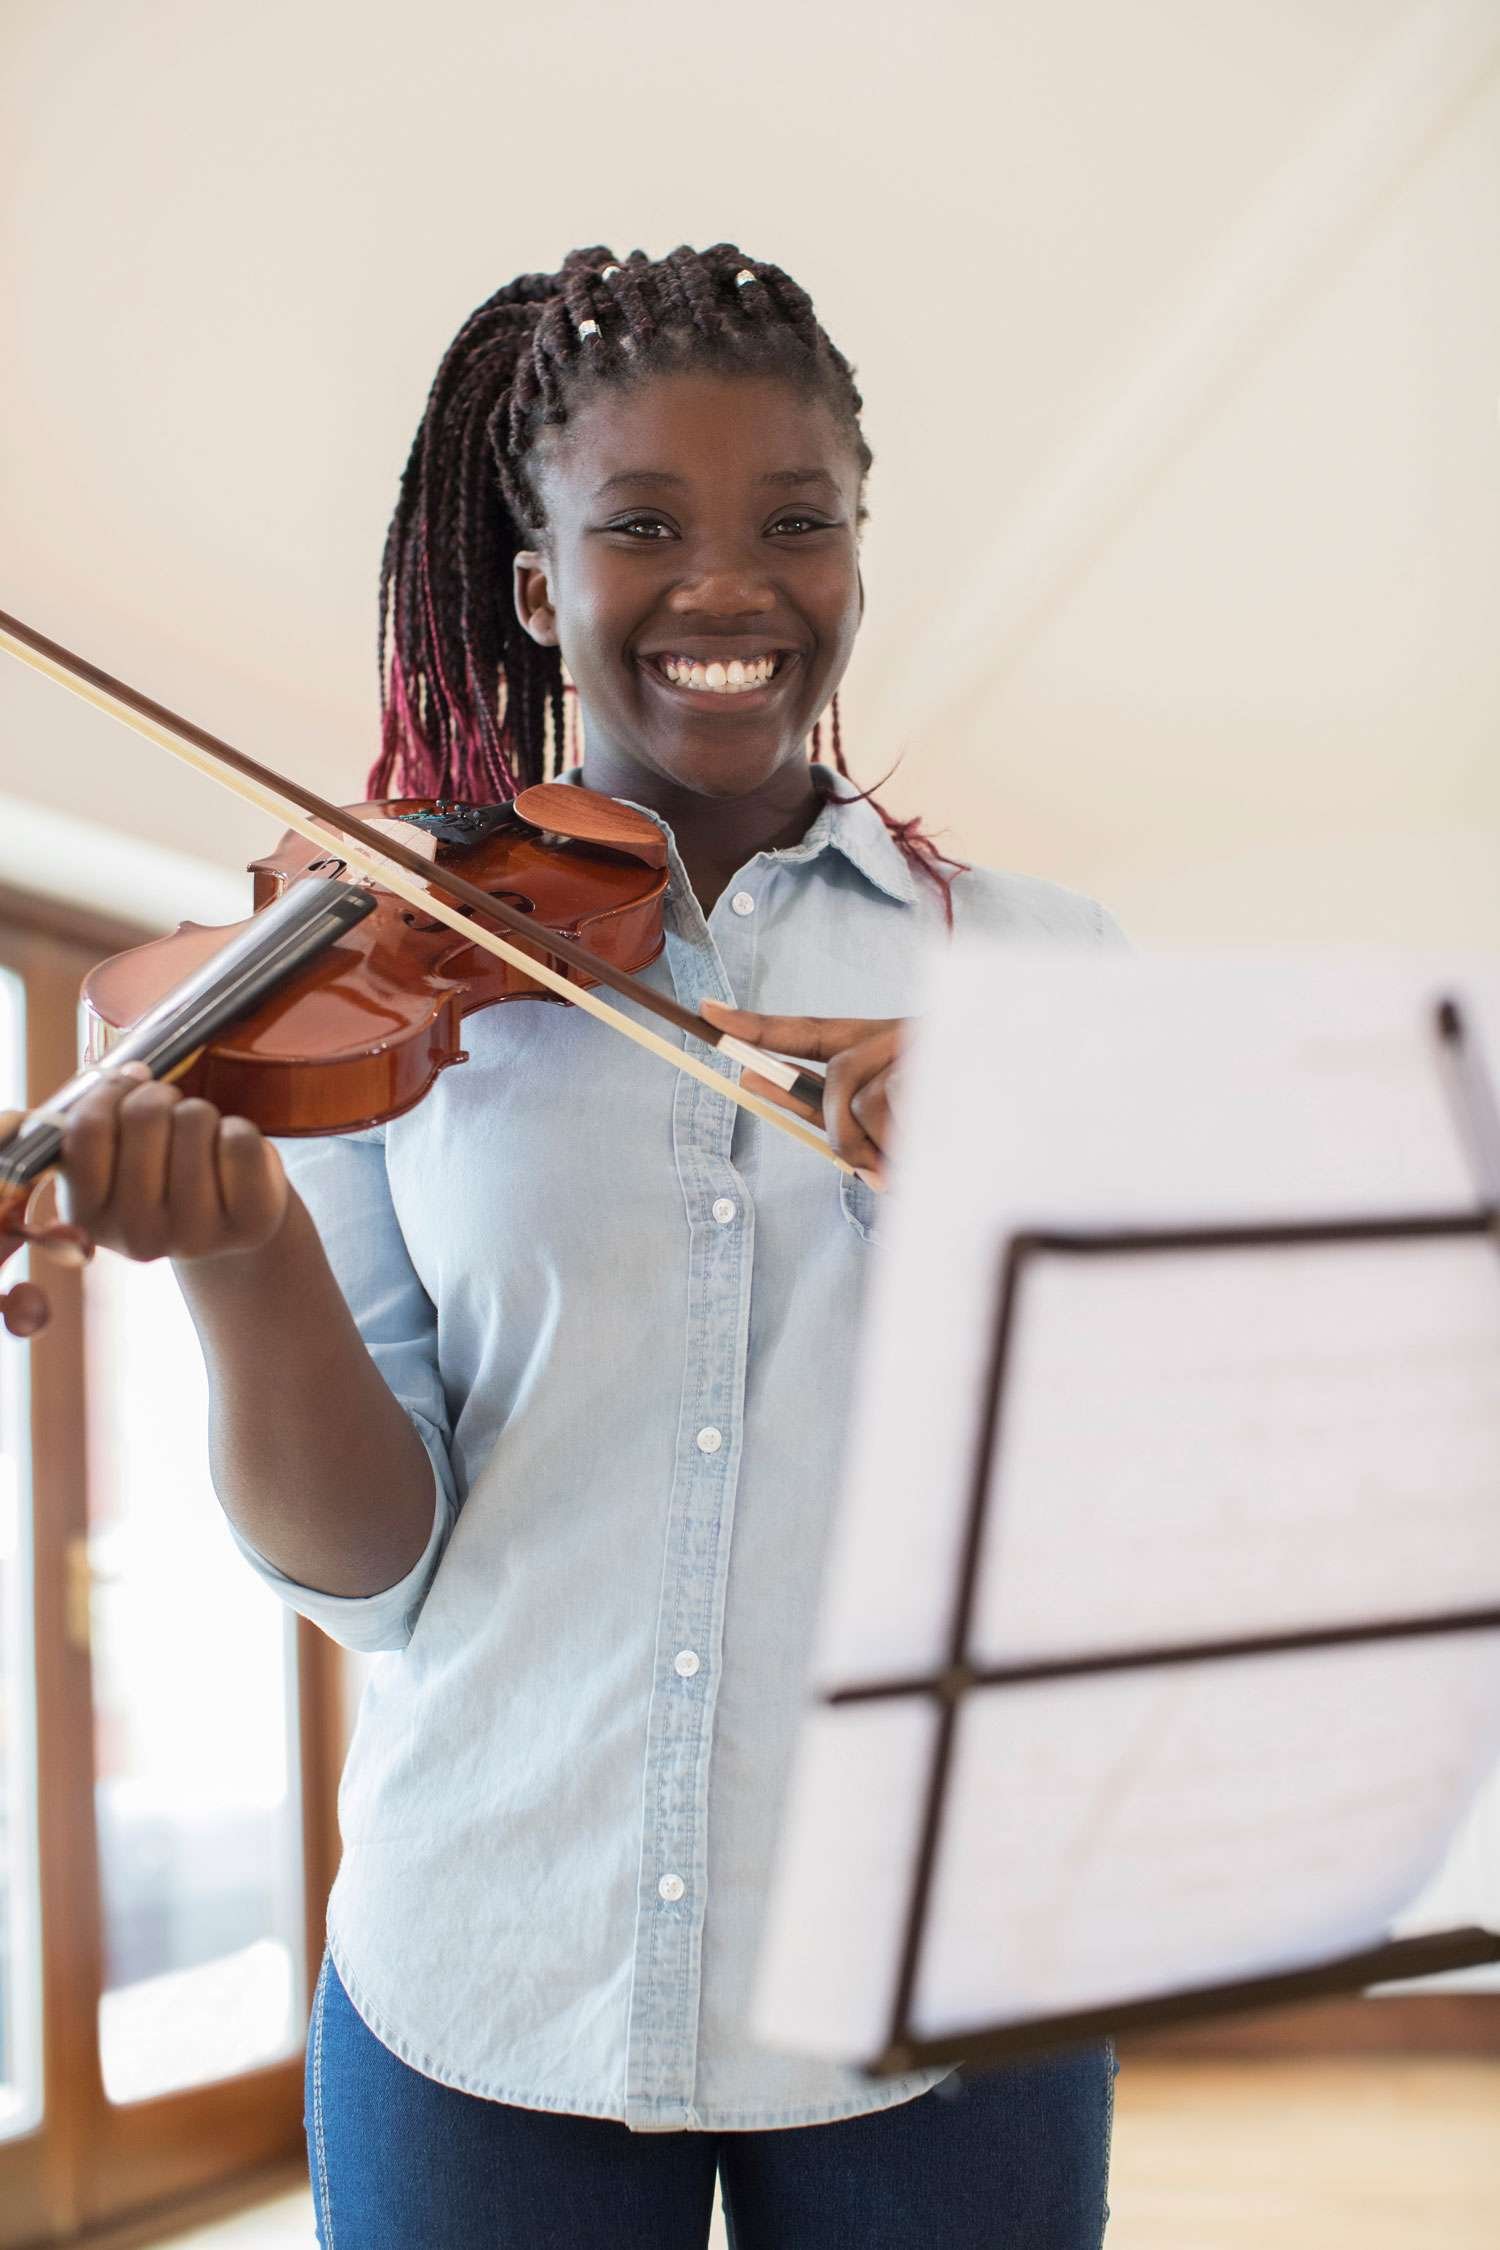 young violin student smiling at the camera